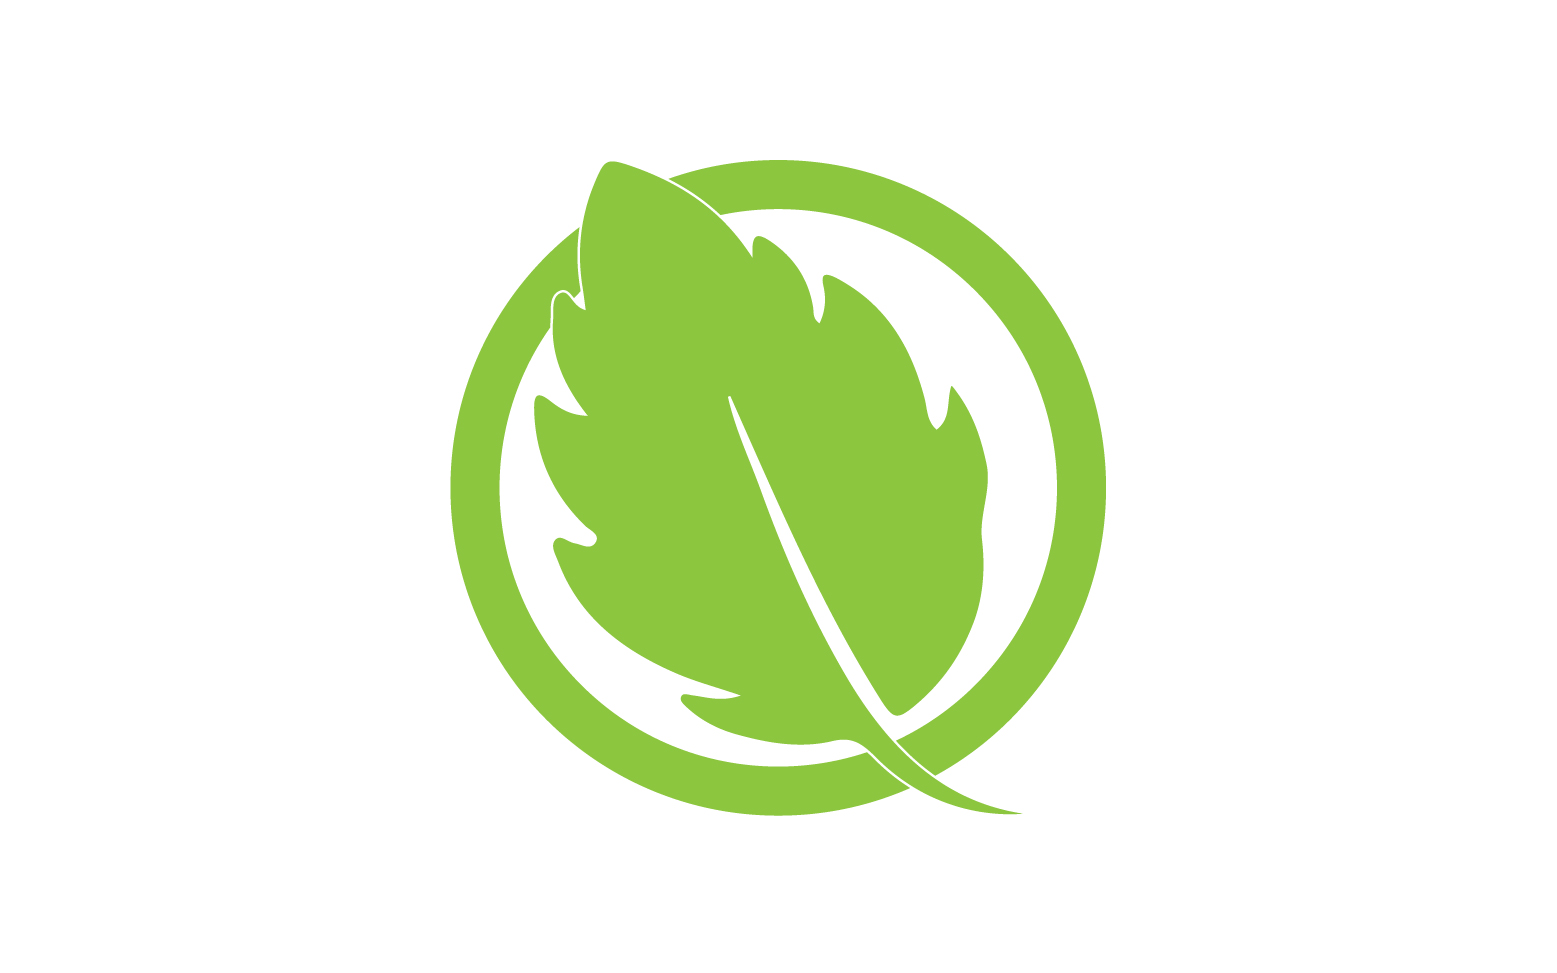 Green leaf eco tree icon logo version 16